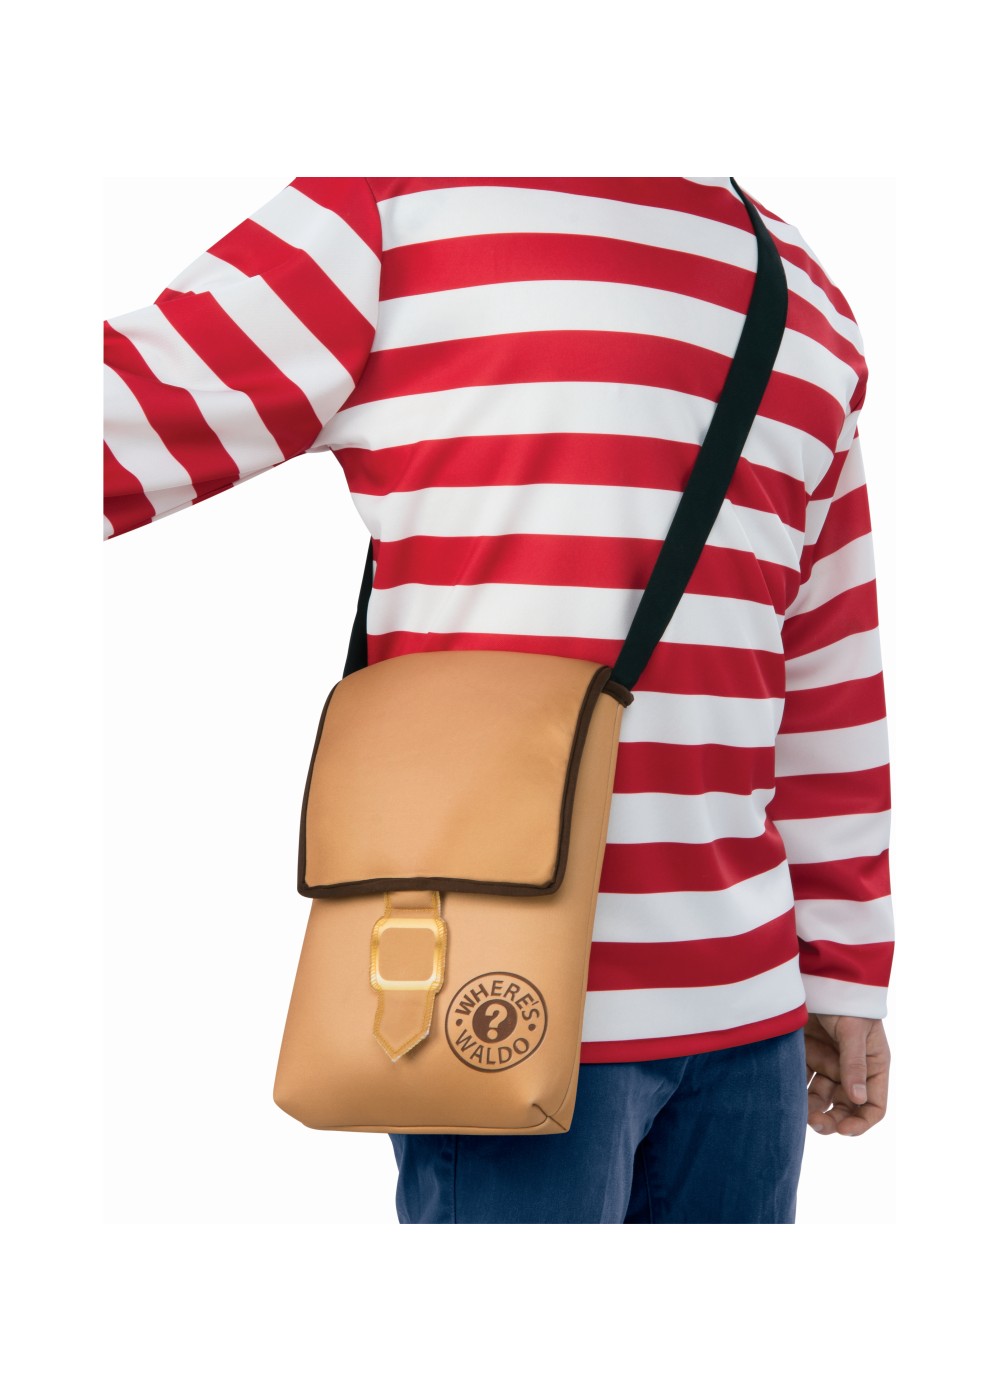 Wheres Waldo Messenger Bag